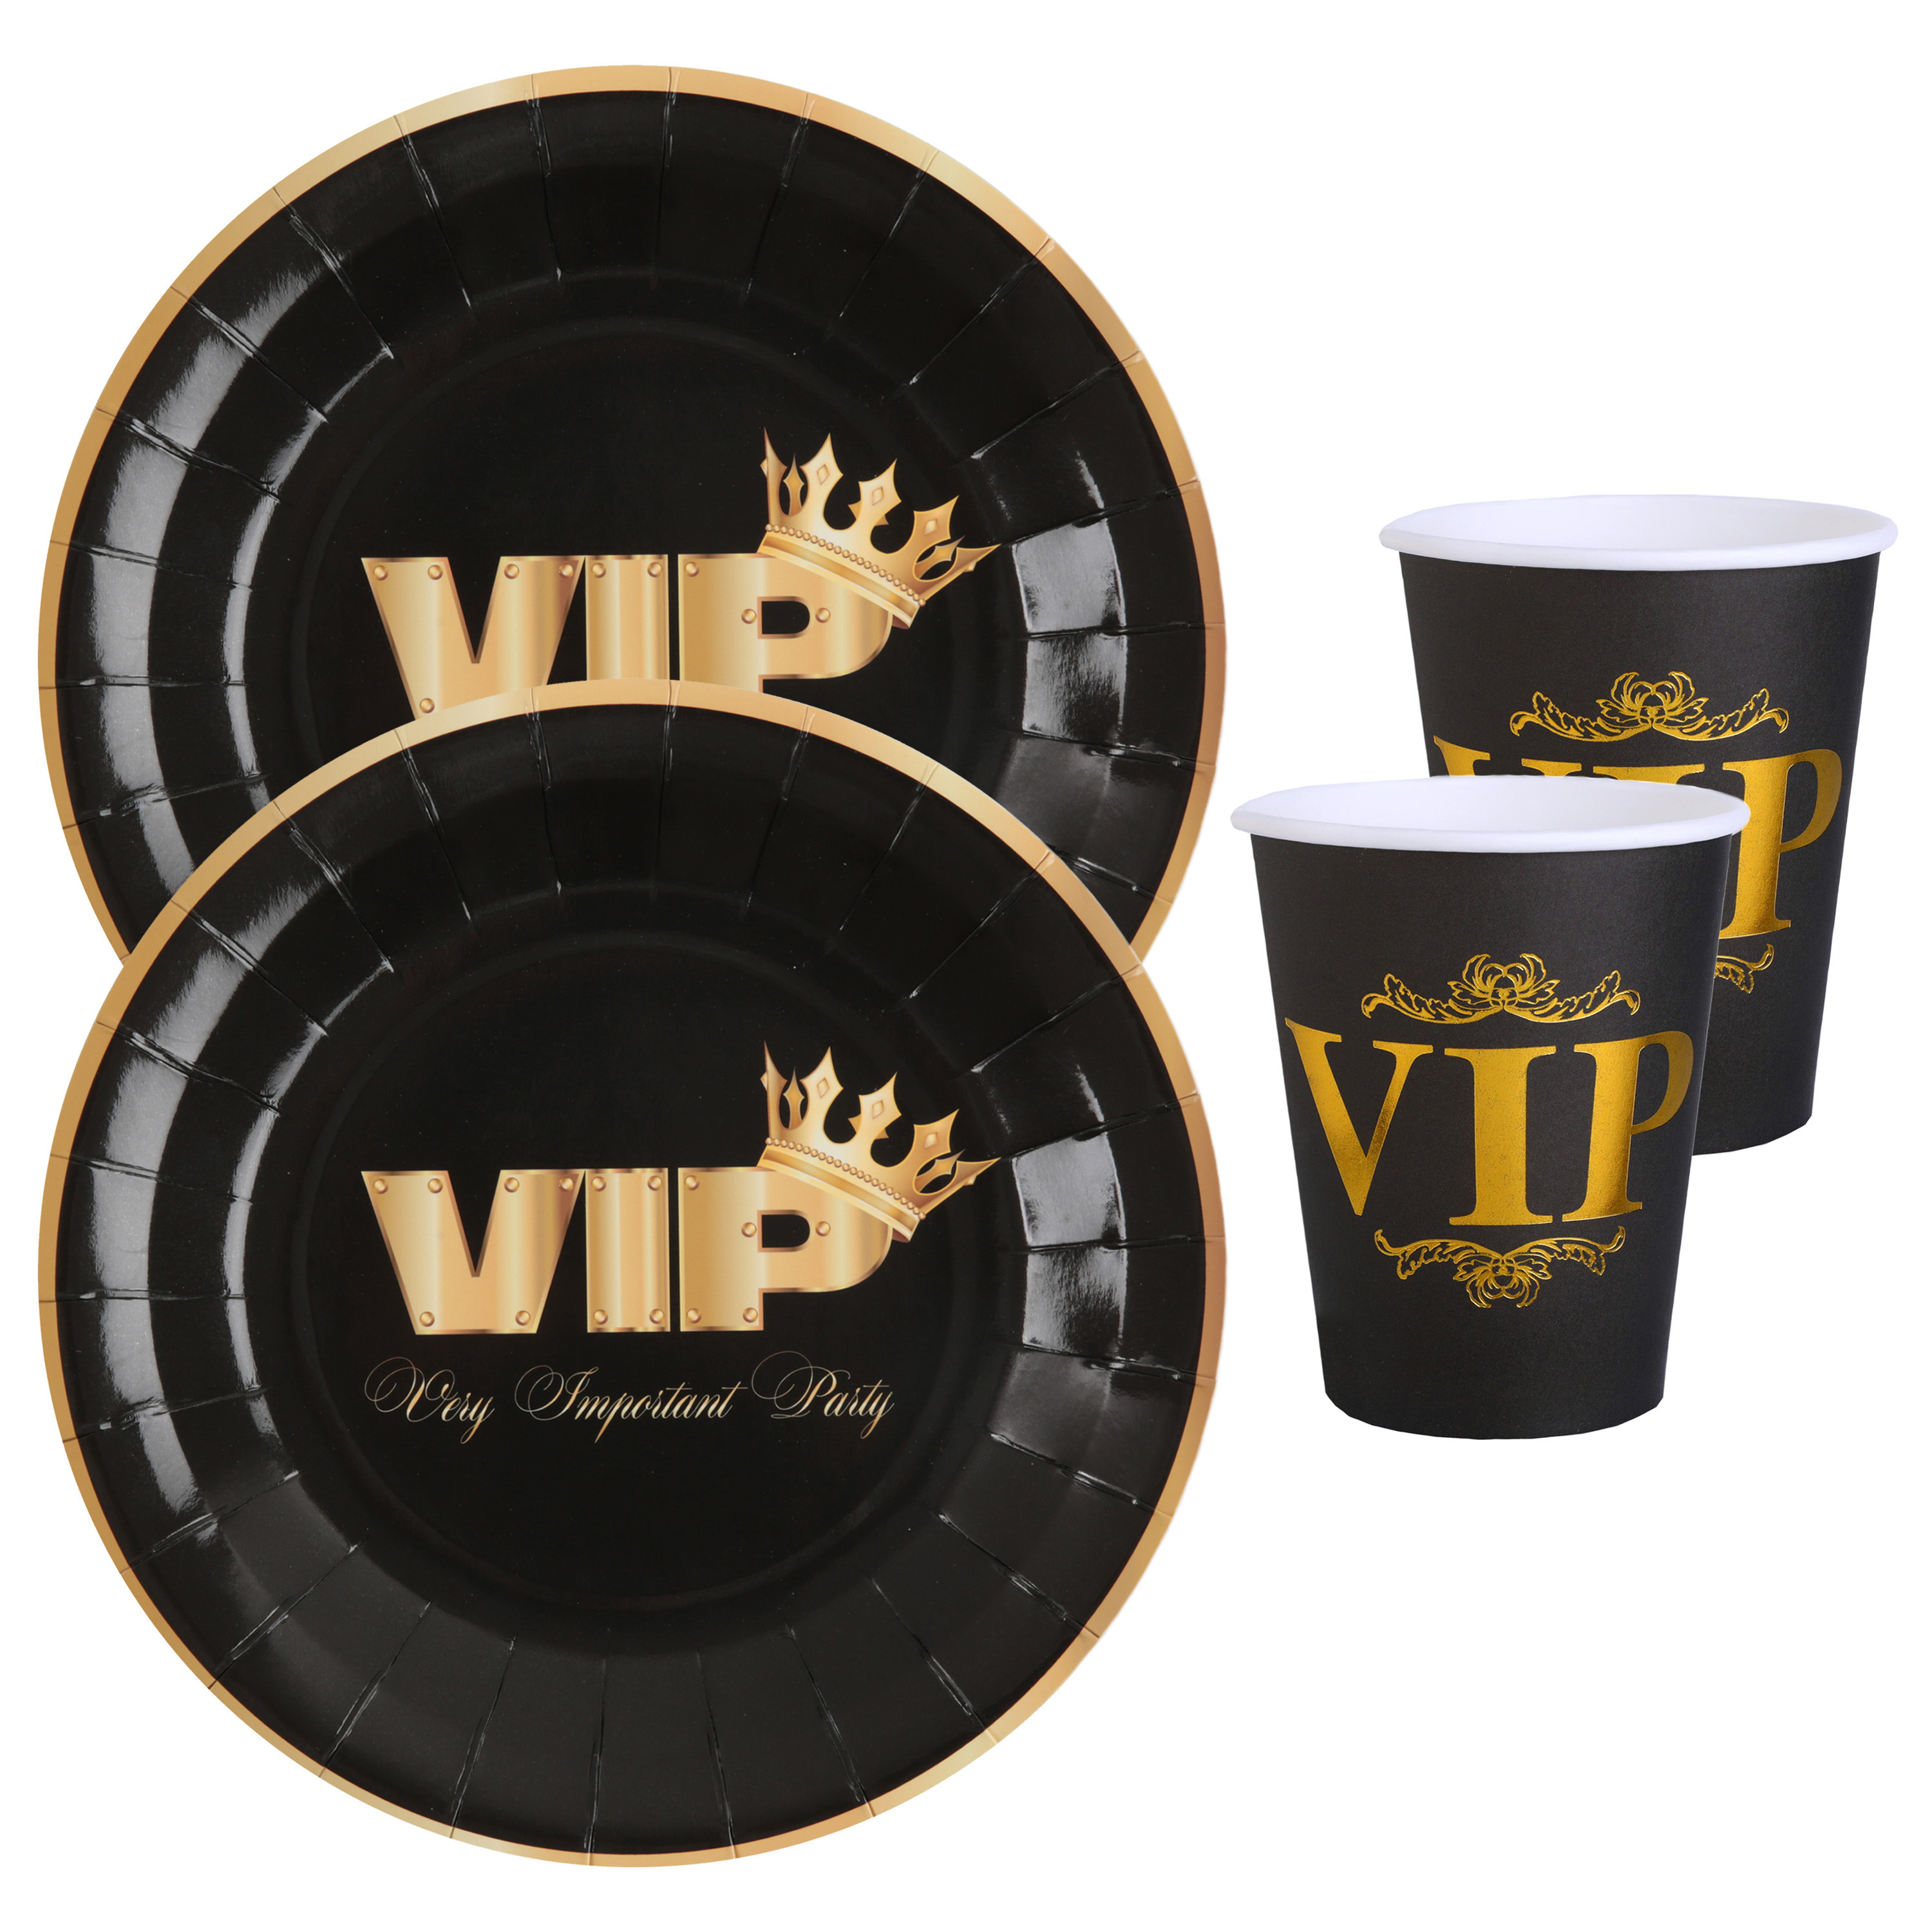 VIP thema feest wegwerp servies set 10x bordjes-10x bekers zwart-goud